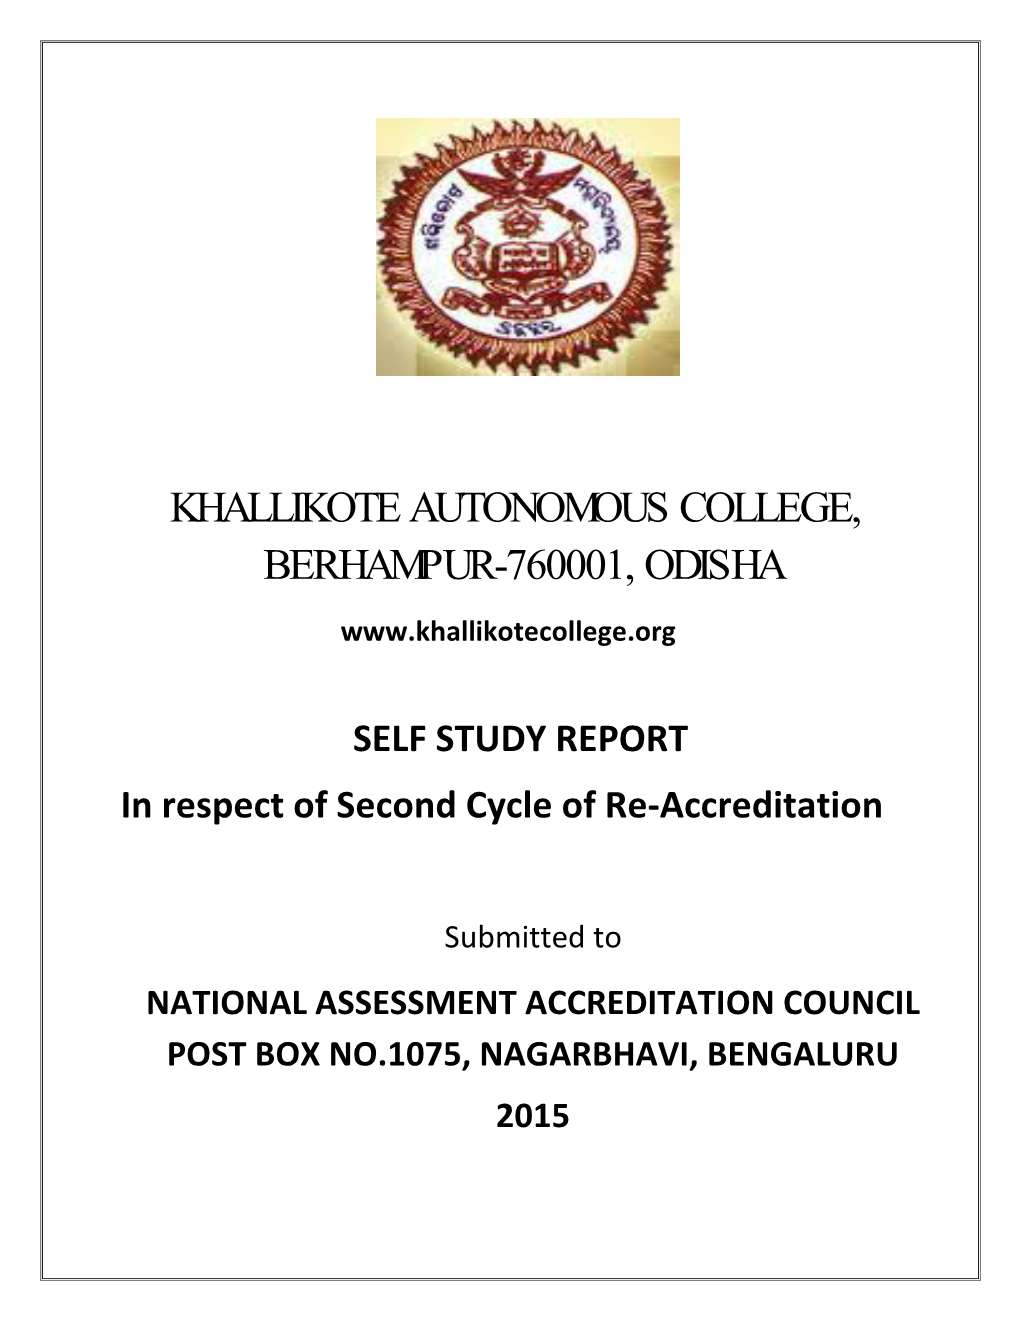 Khallikote Autonomous College, Berhampur-760001